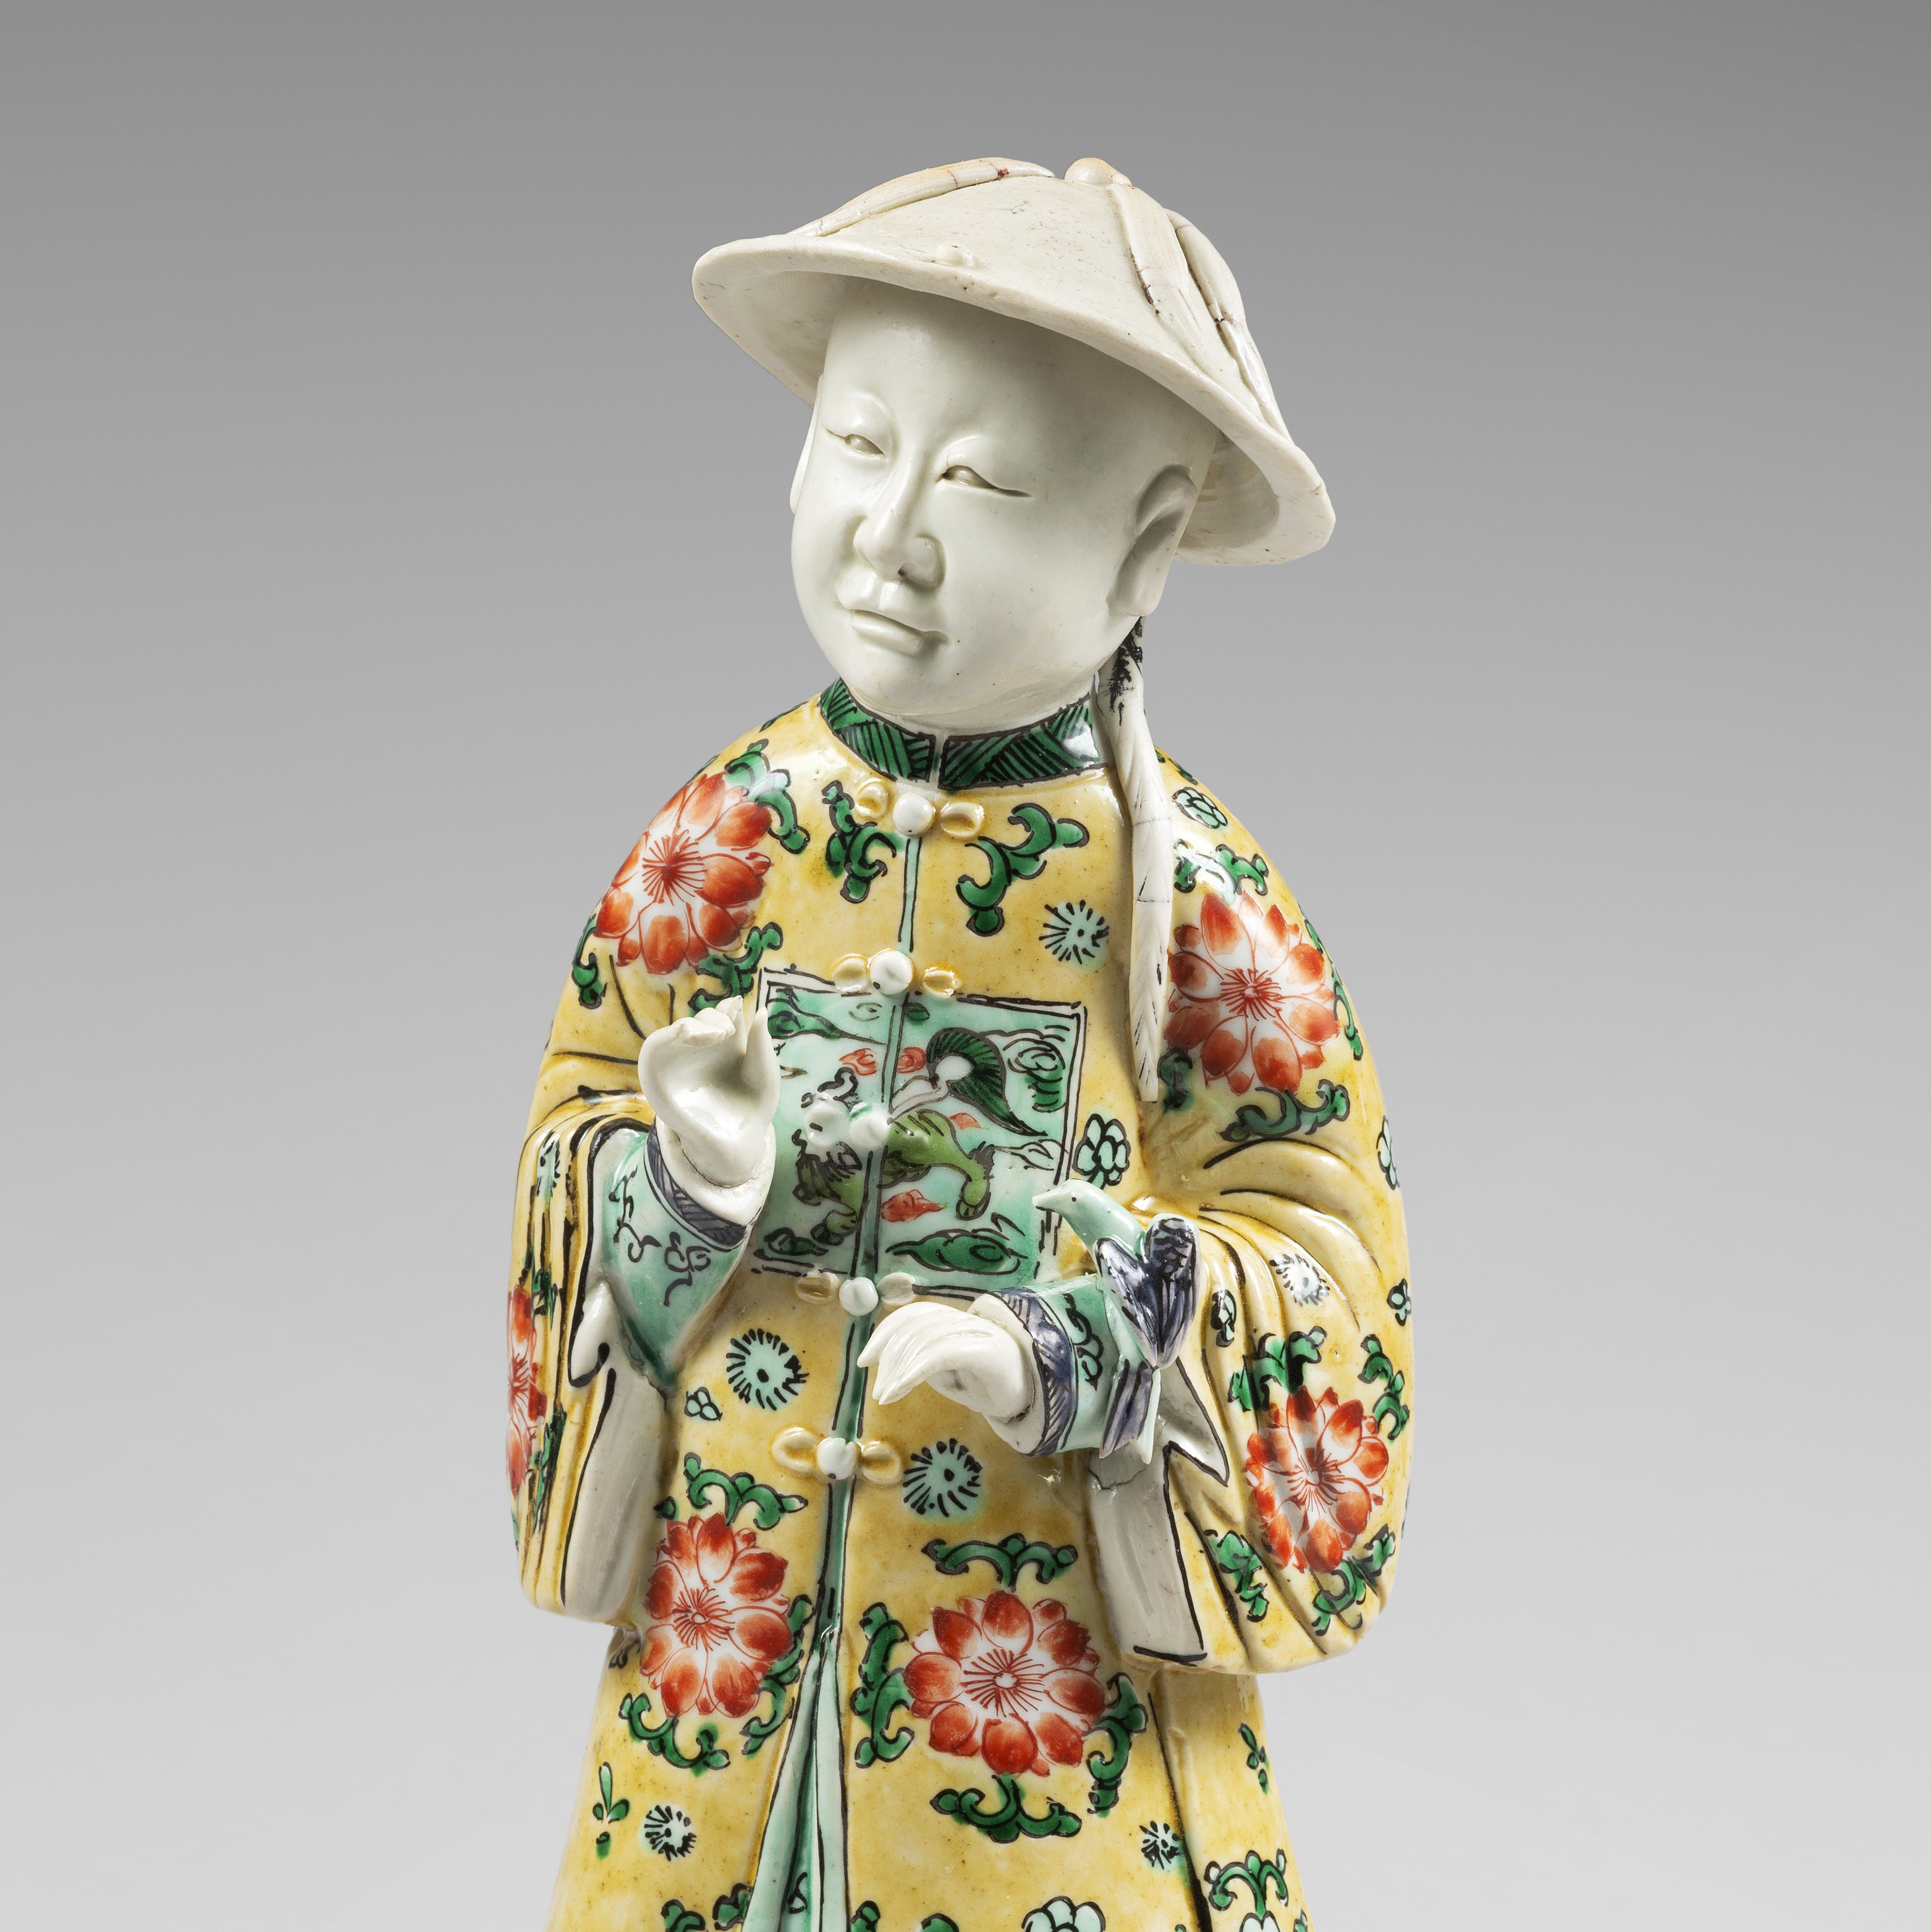 Porcelain Kangxi period (1662-1722), China